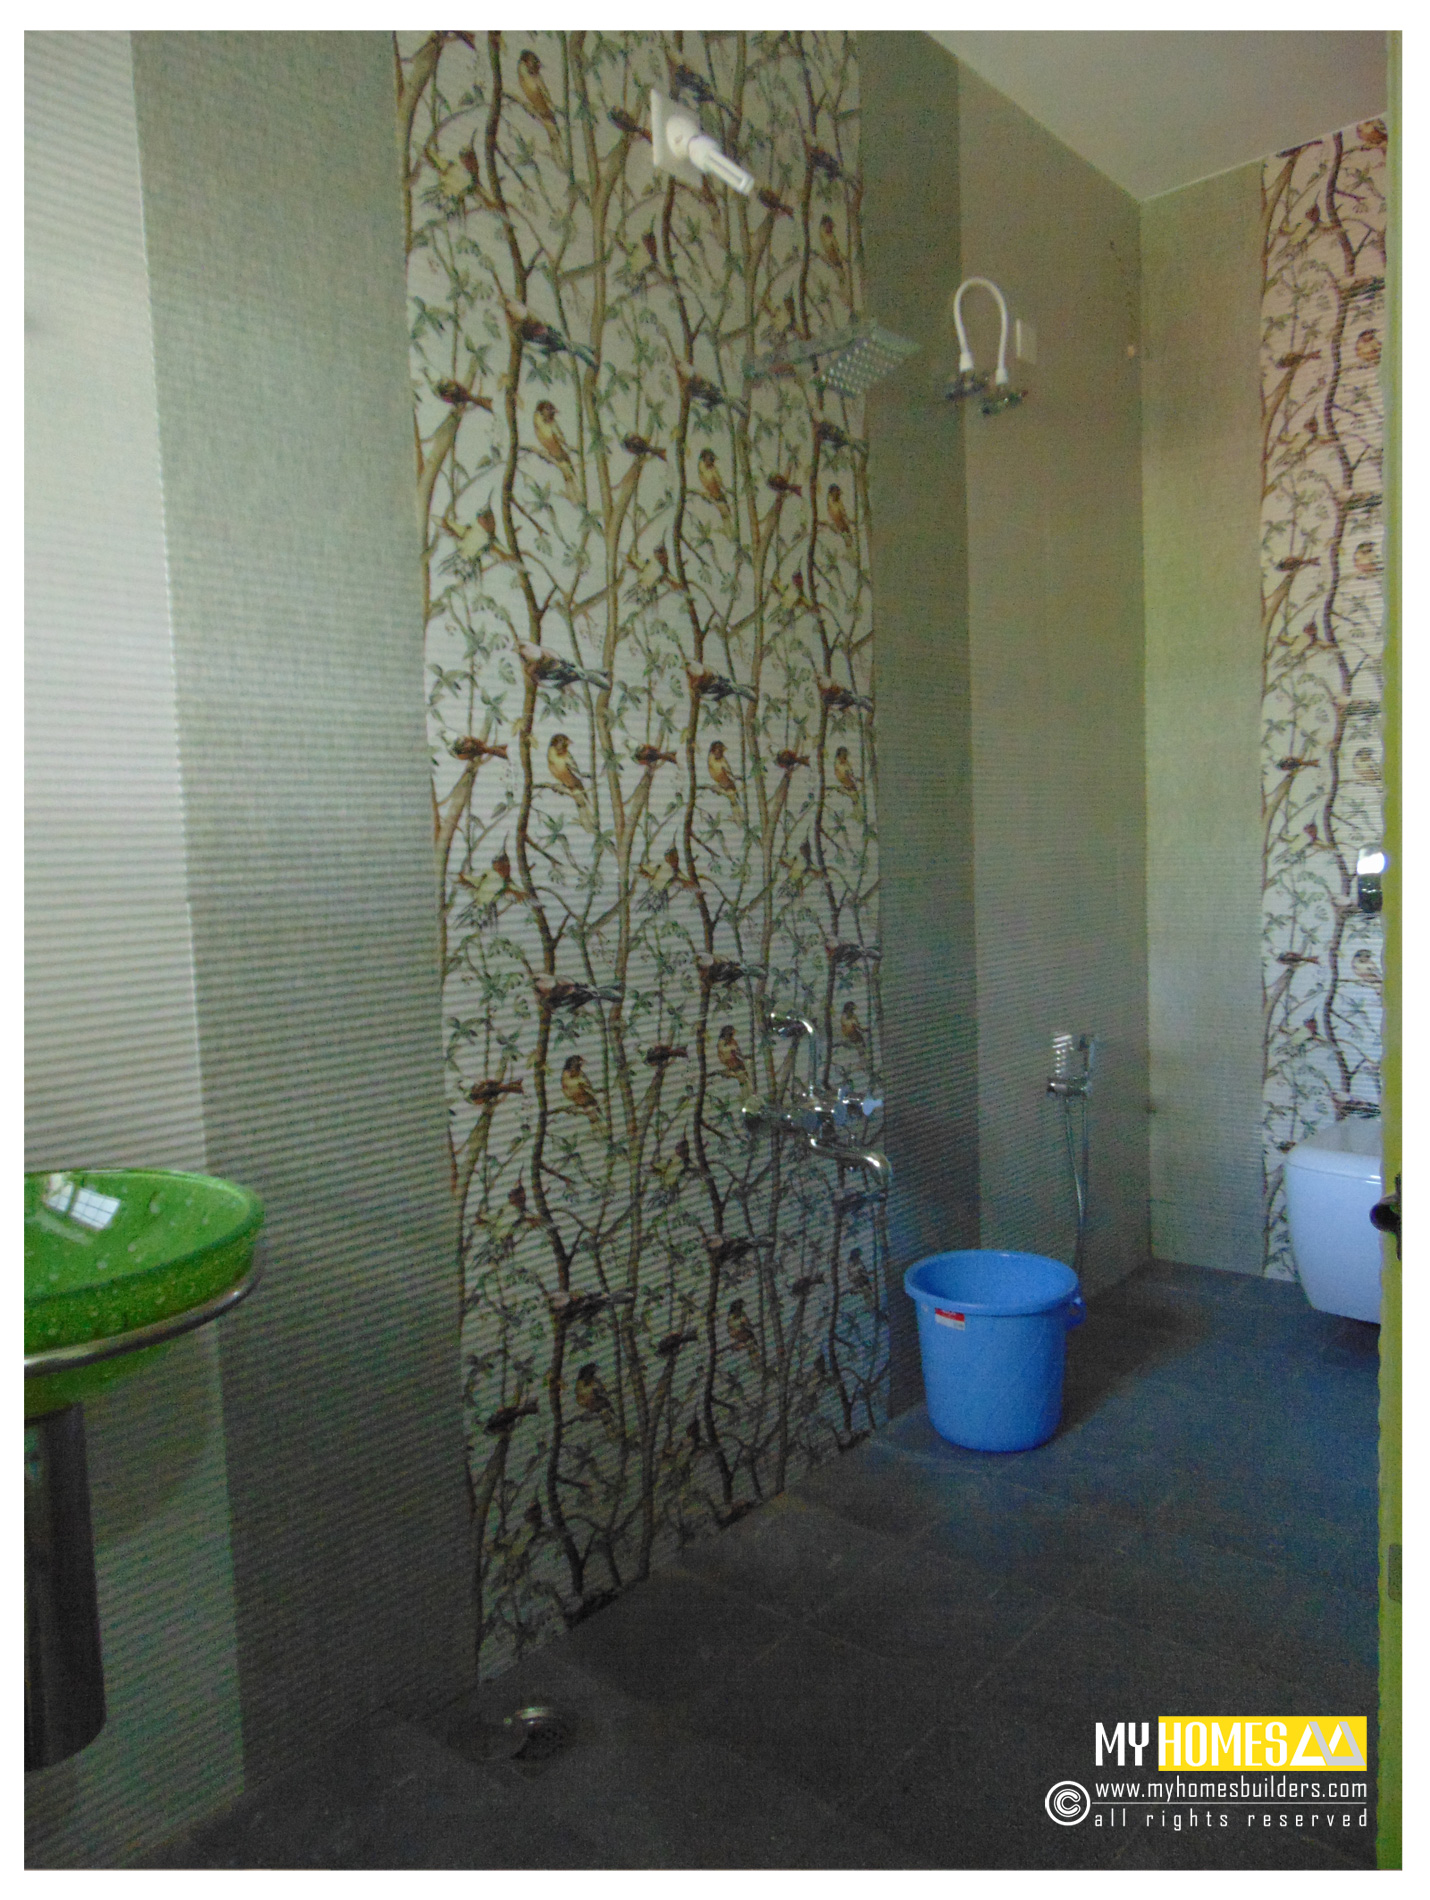 kerala home bathrooms, bathrooms tiles in kerala, kerala bathroom tiles designs